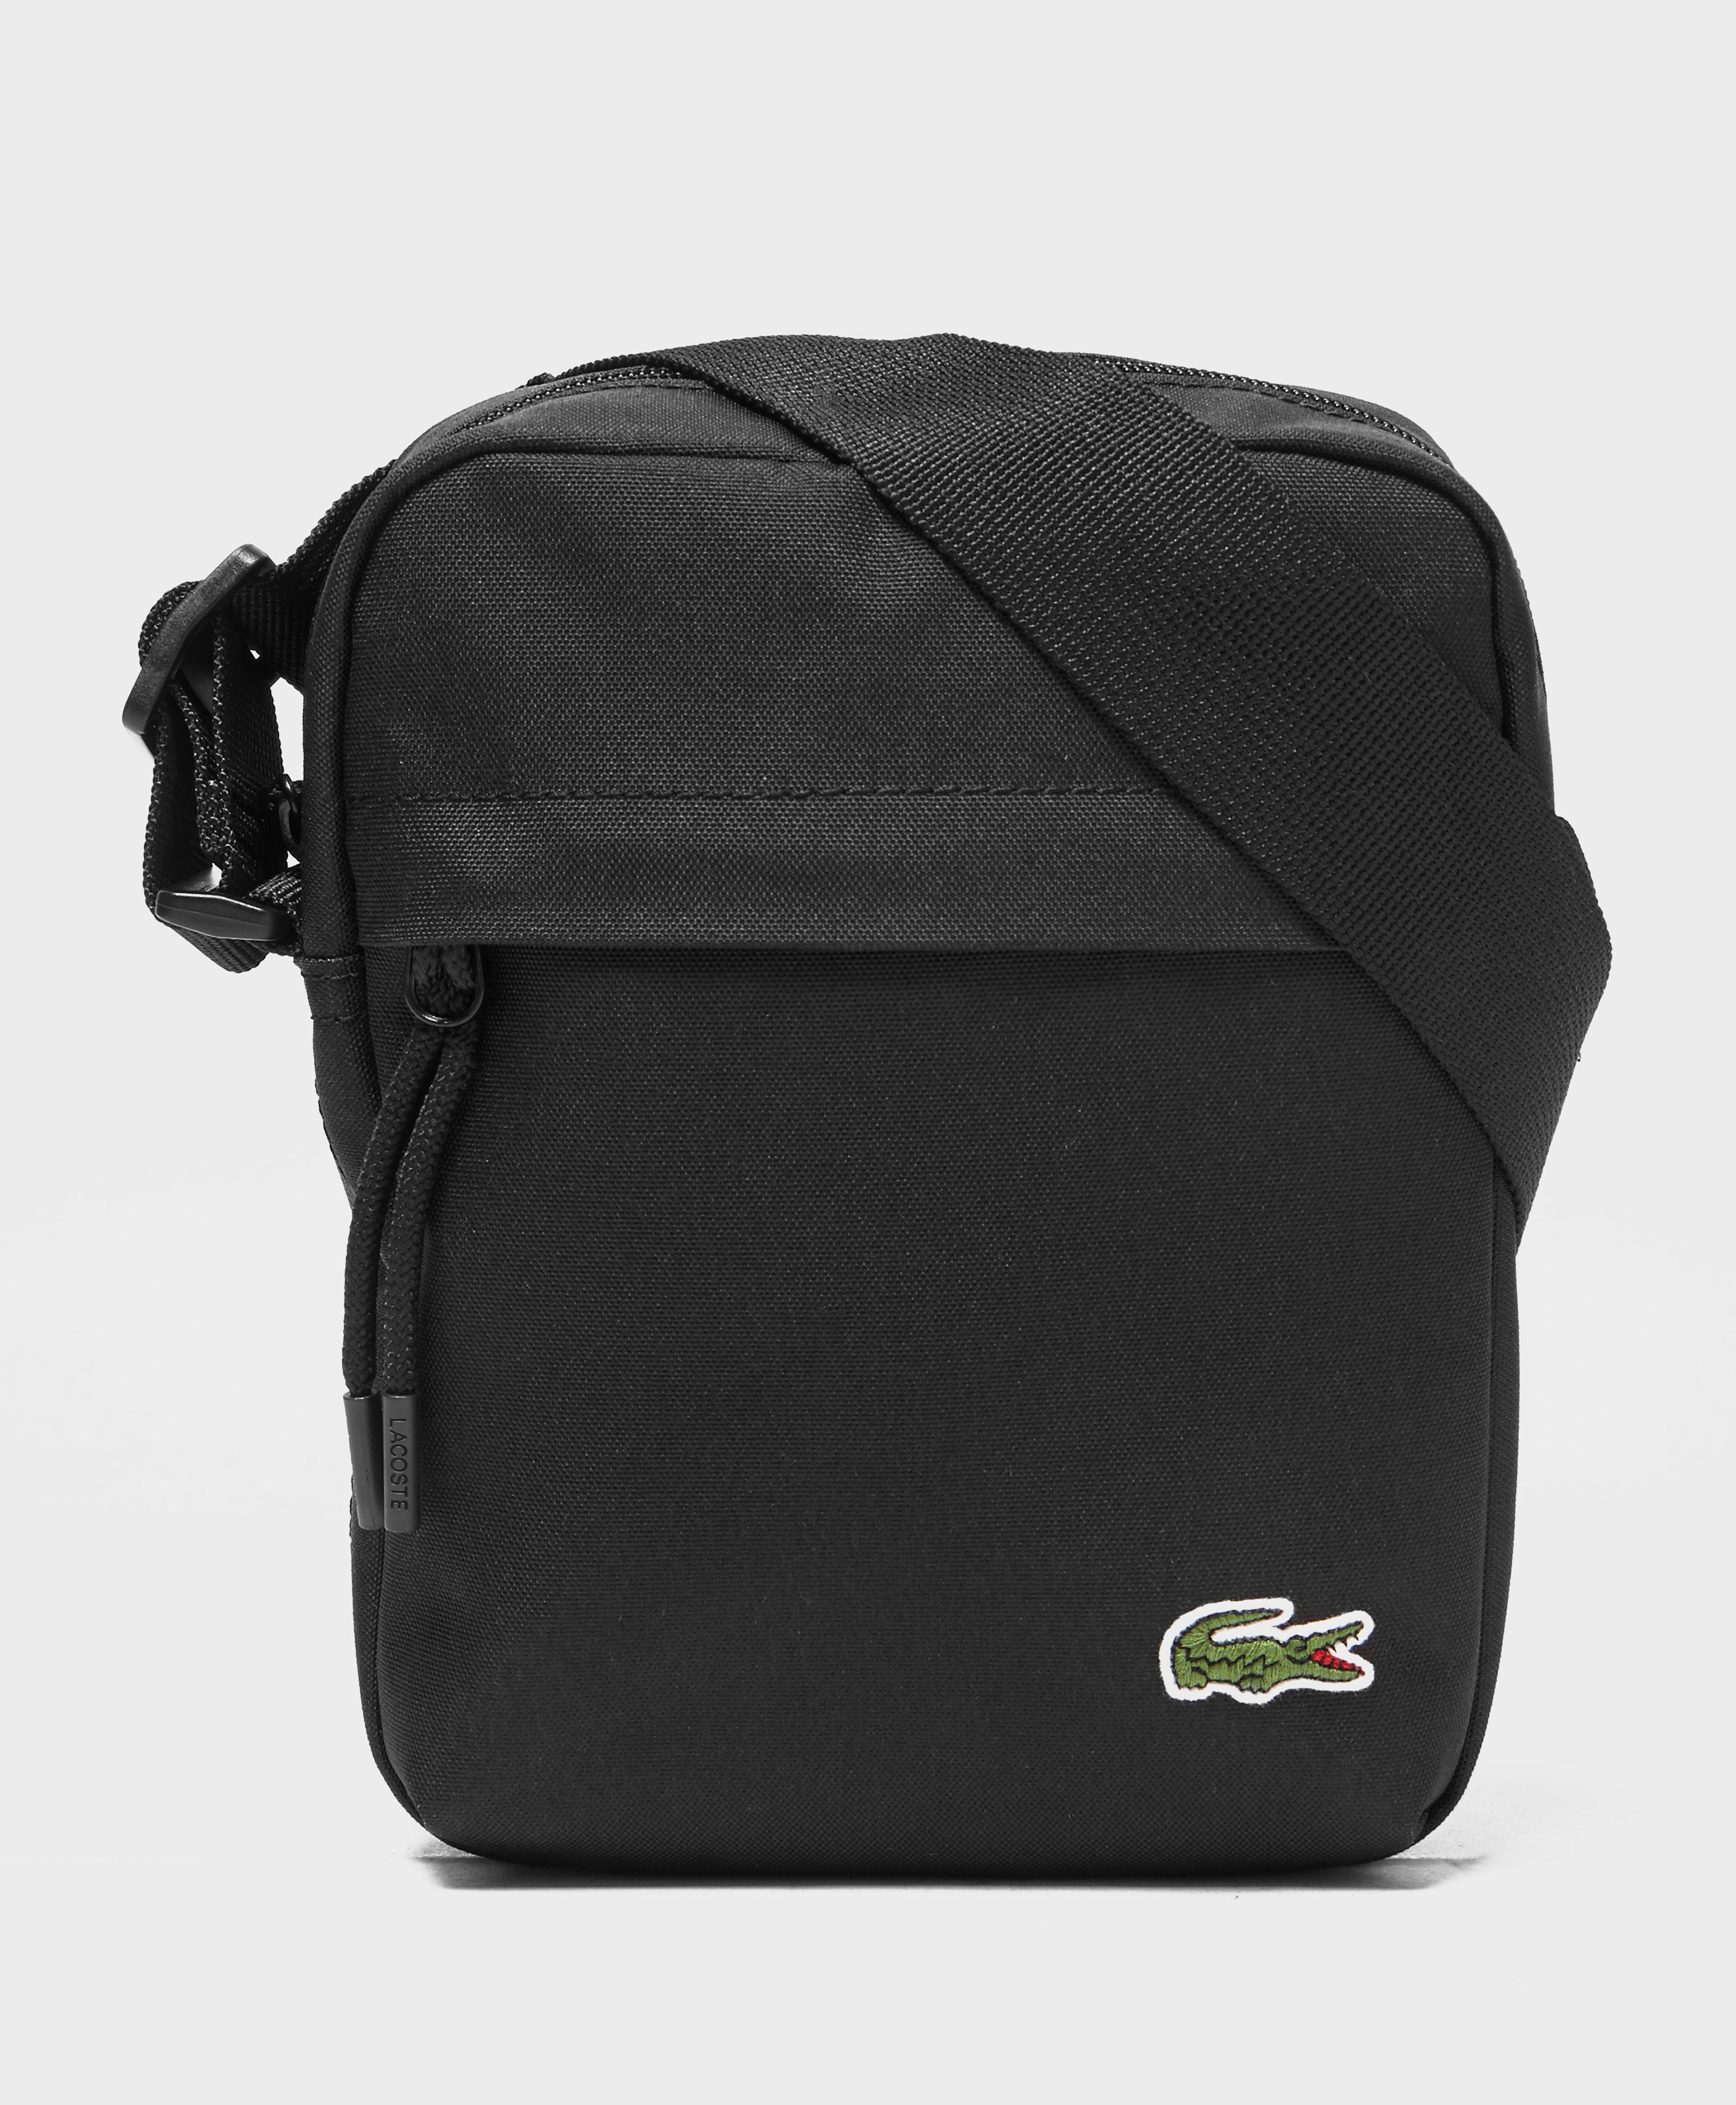 Lyst - Lacoste Mini Bag in Black for Men